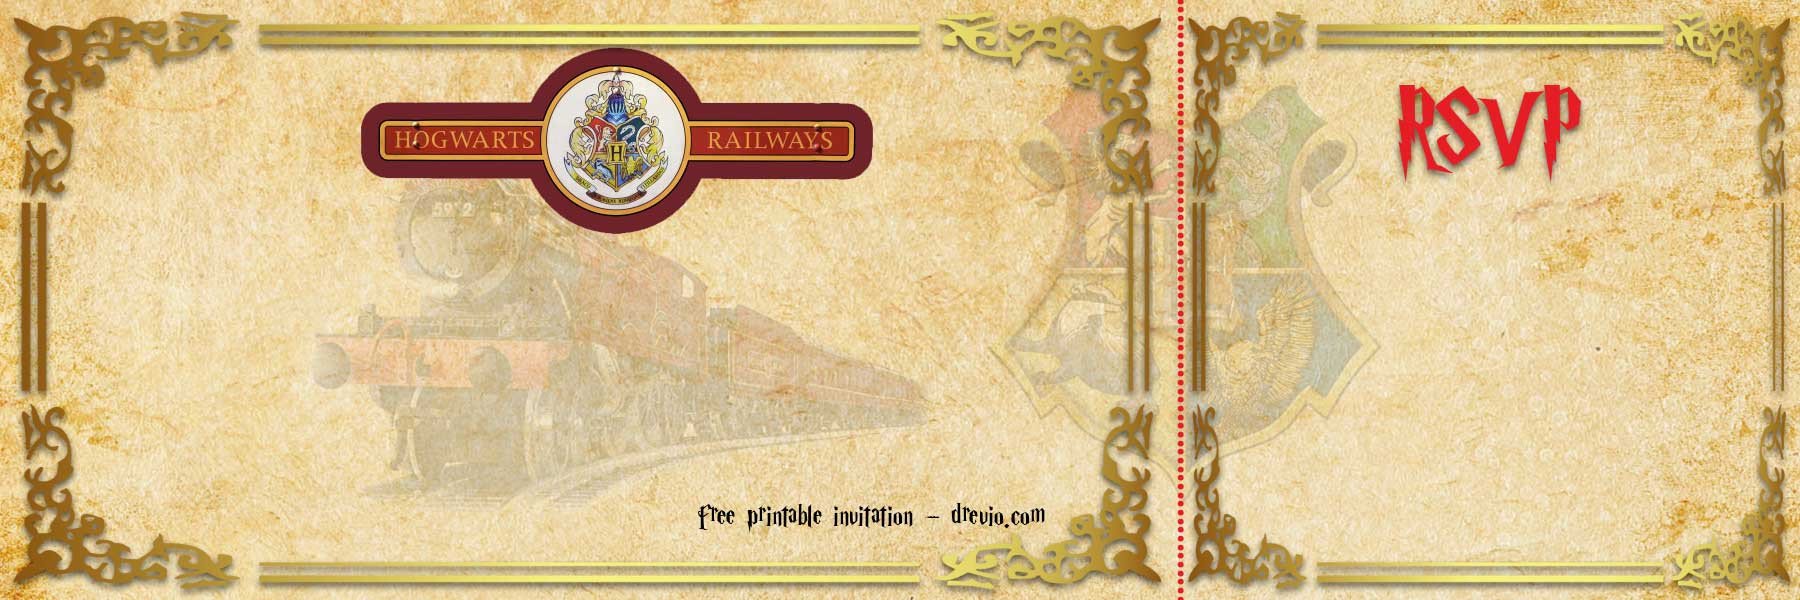 FREE Printable Hogwarts Express Ticket Invitation Template